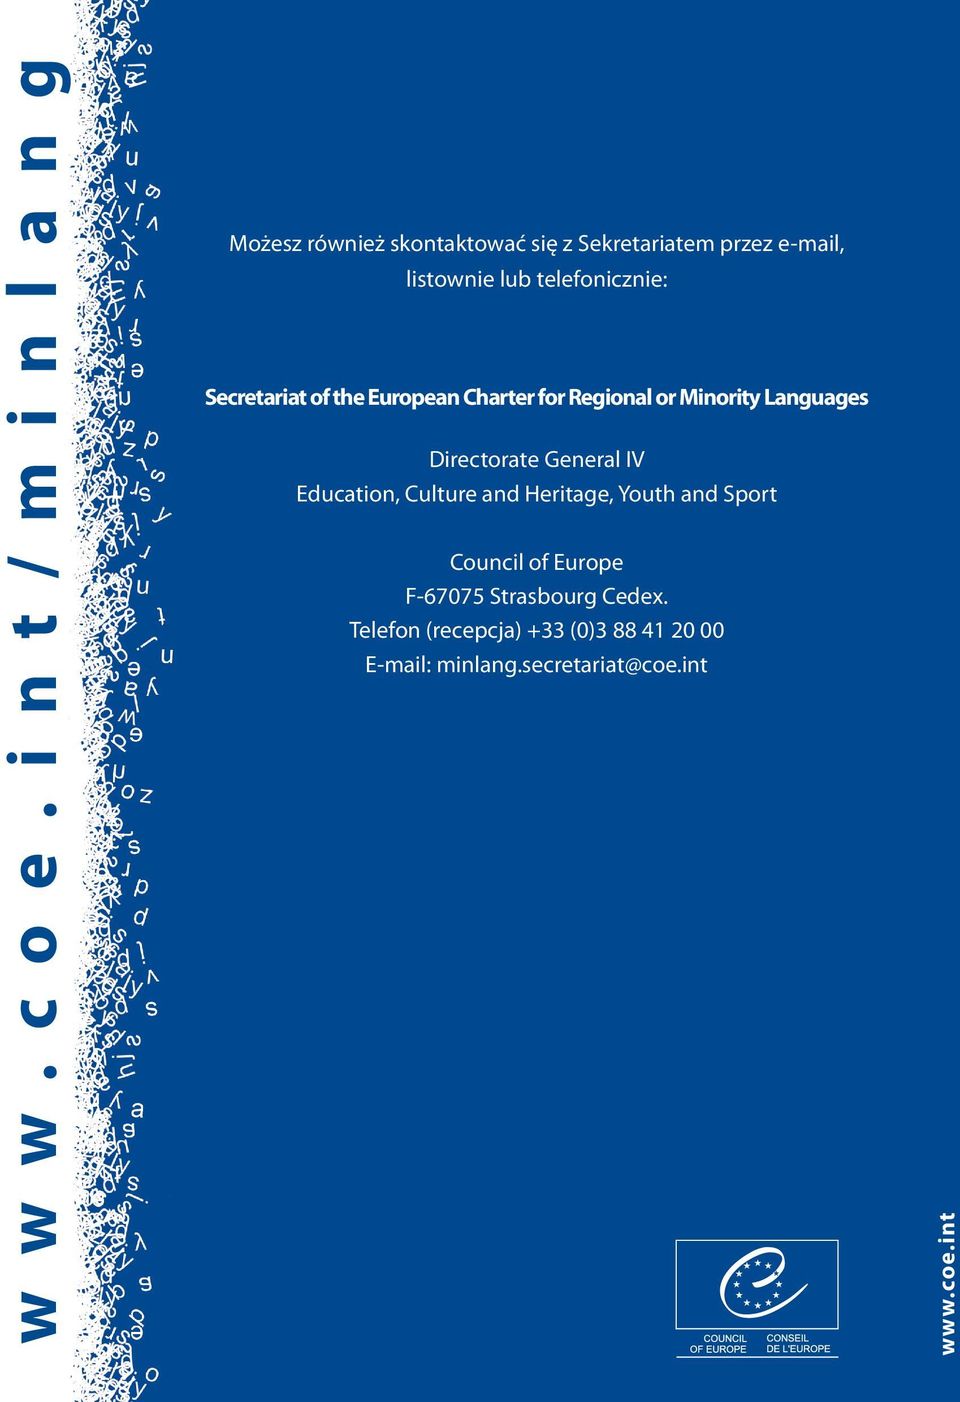 telefonicznie: Secretariat of the European Charter for Regional or Minority Languages Directorate